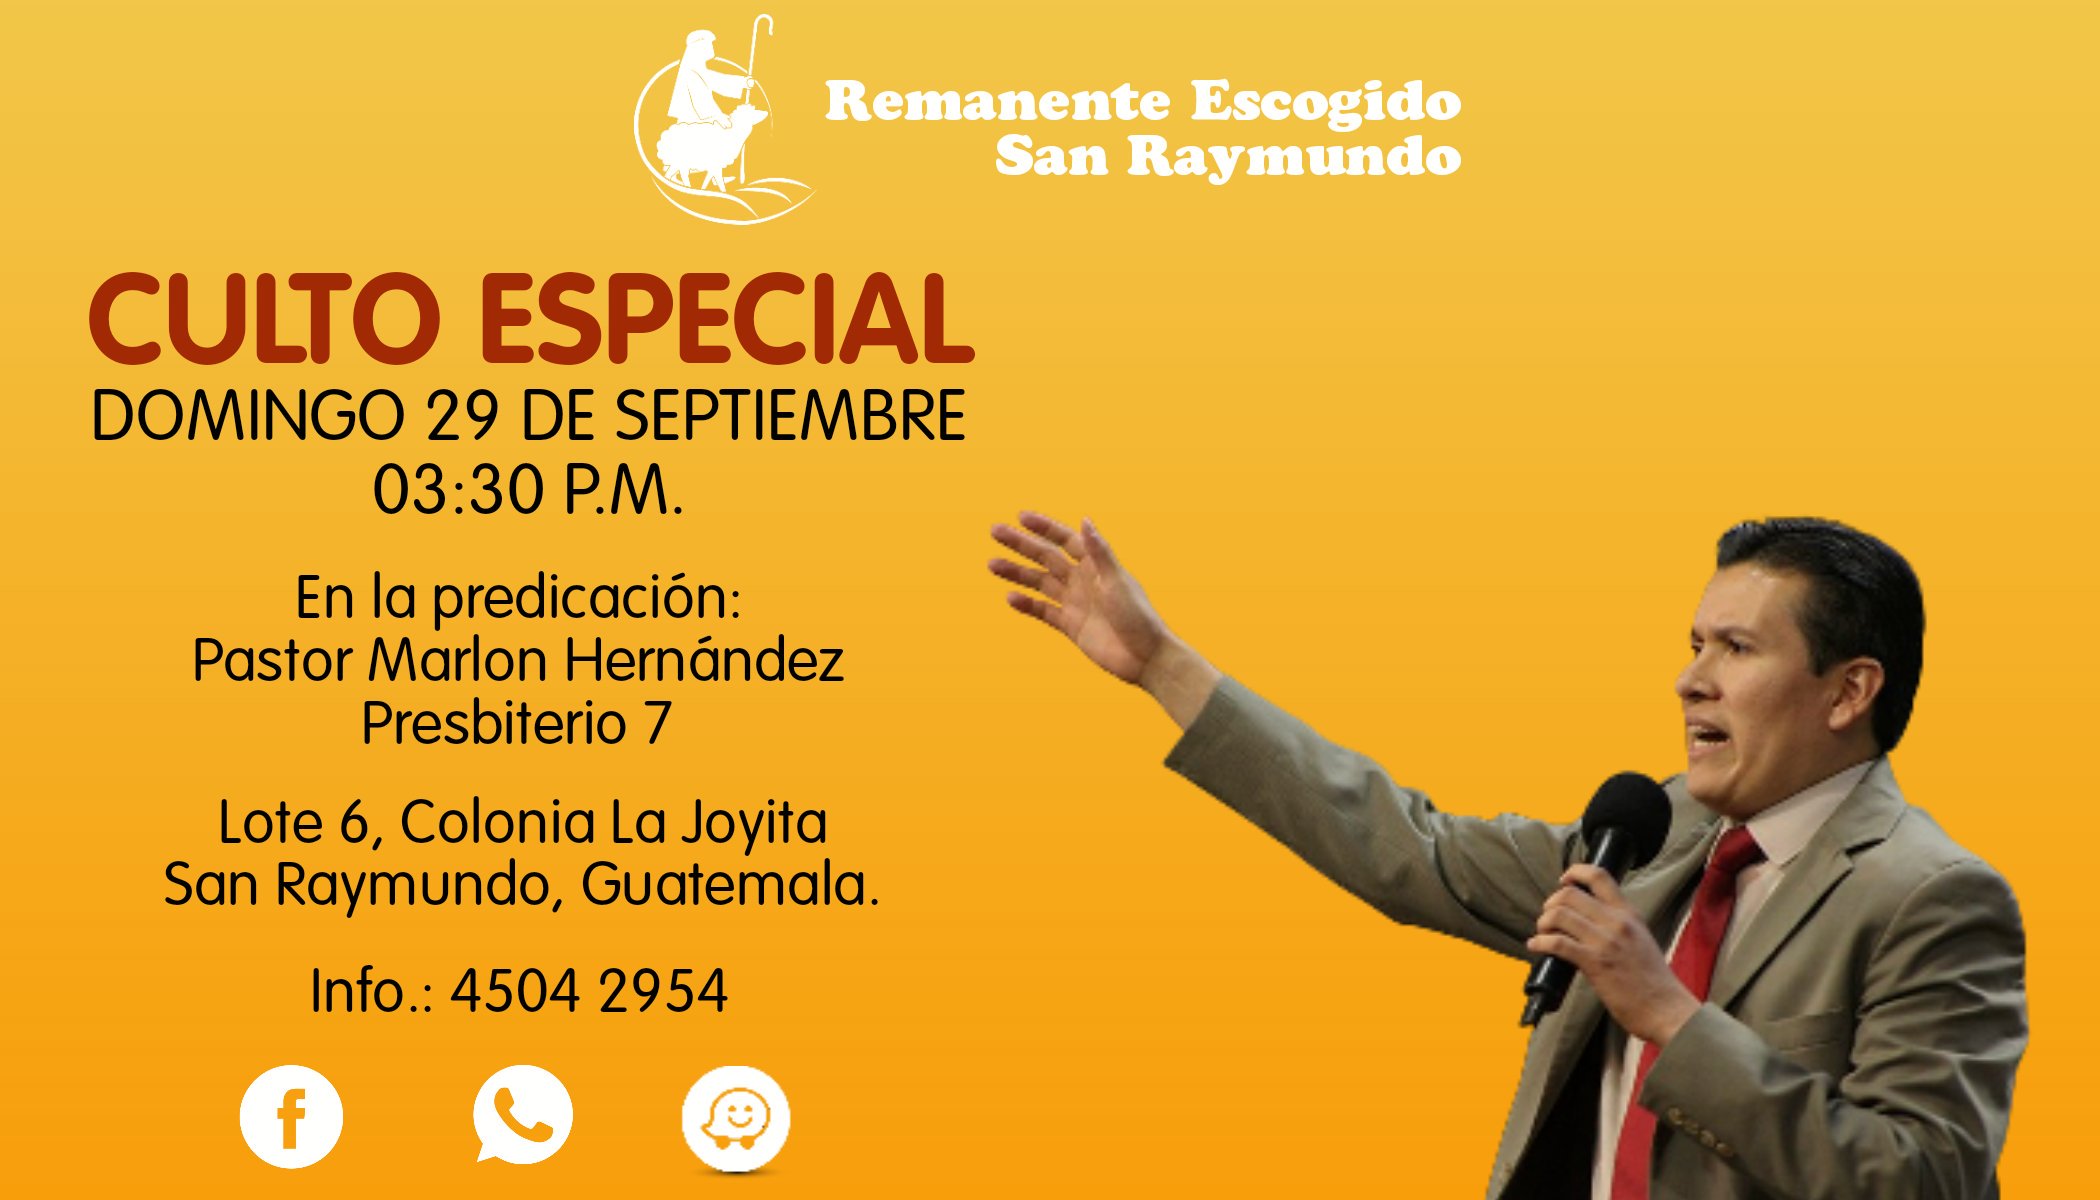 Remanente Escogido San Raymundo (@MMRESanRaymundo) / Twitter